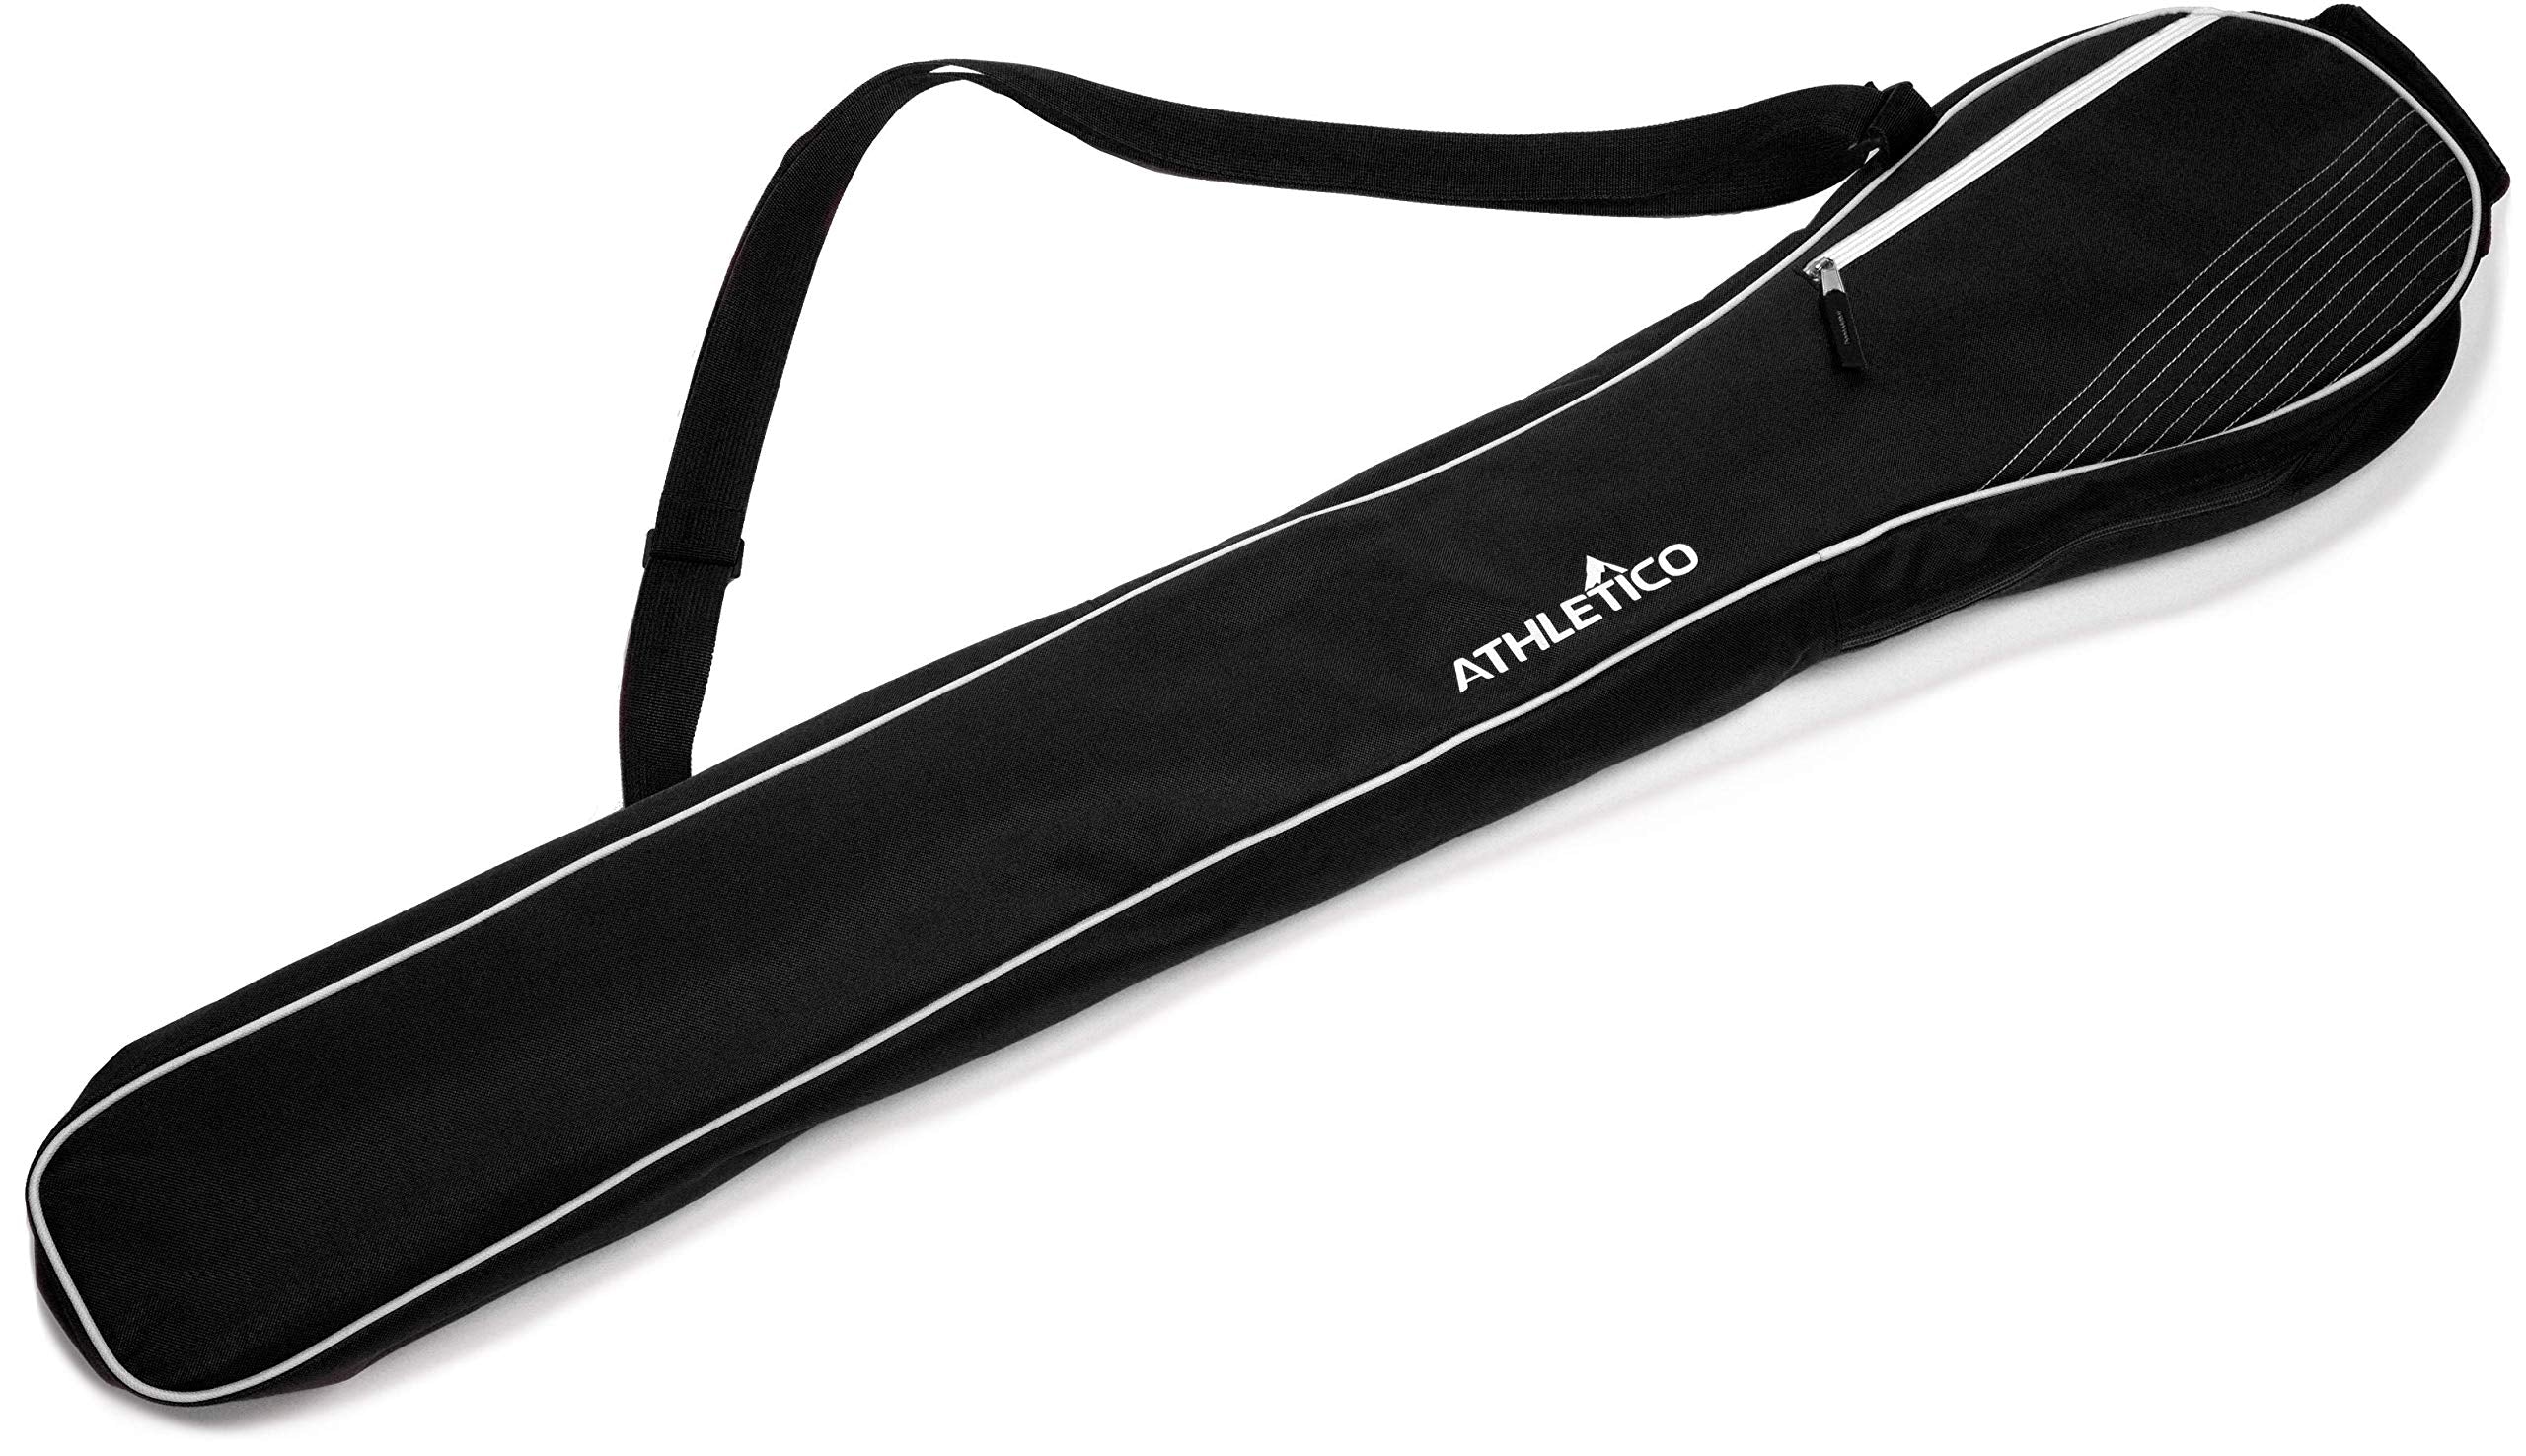 Athletico Lacrosse Stick Bag - Lax Equipment Bags (Black)  - Acceptable